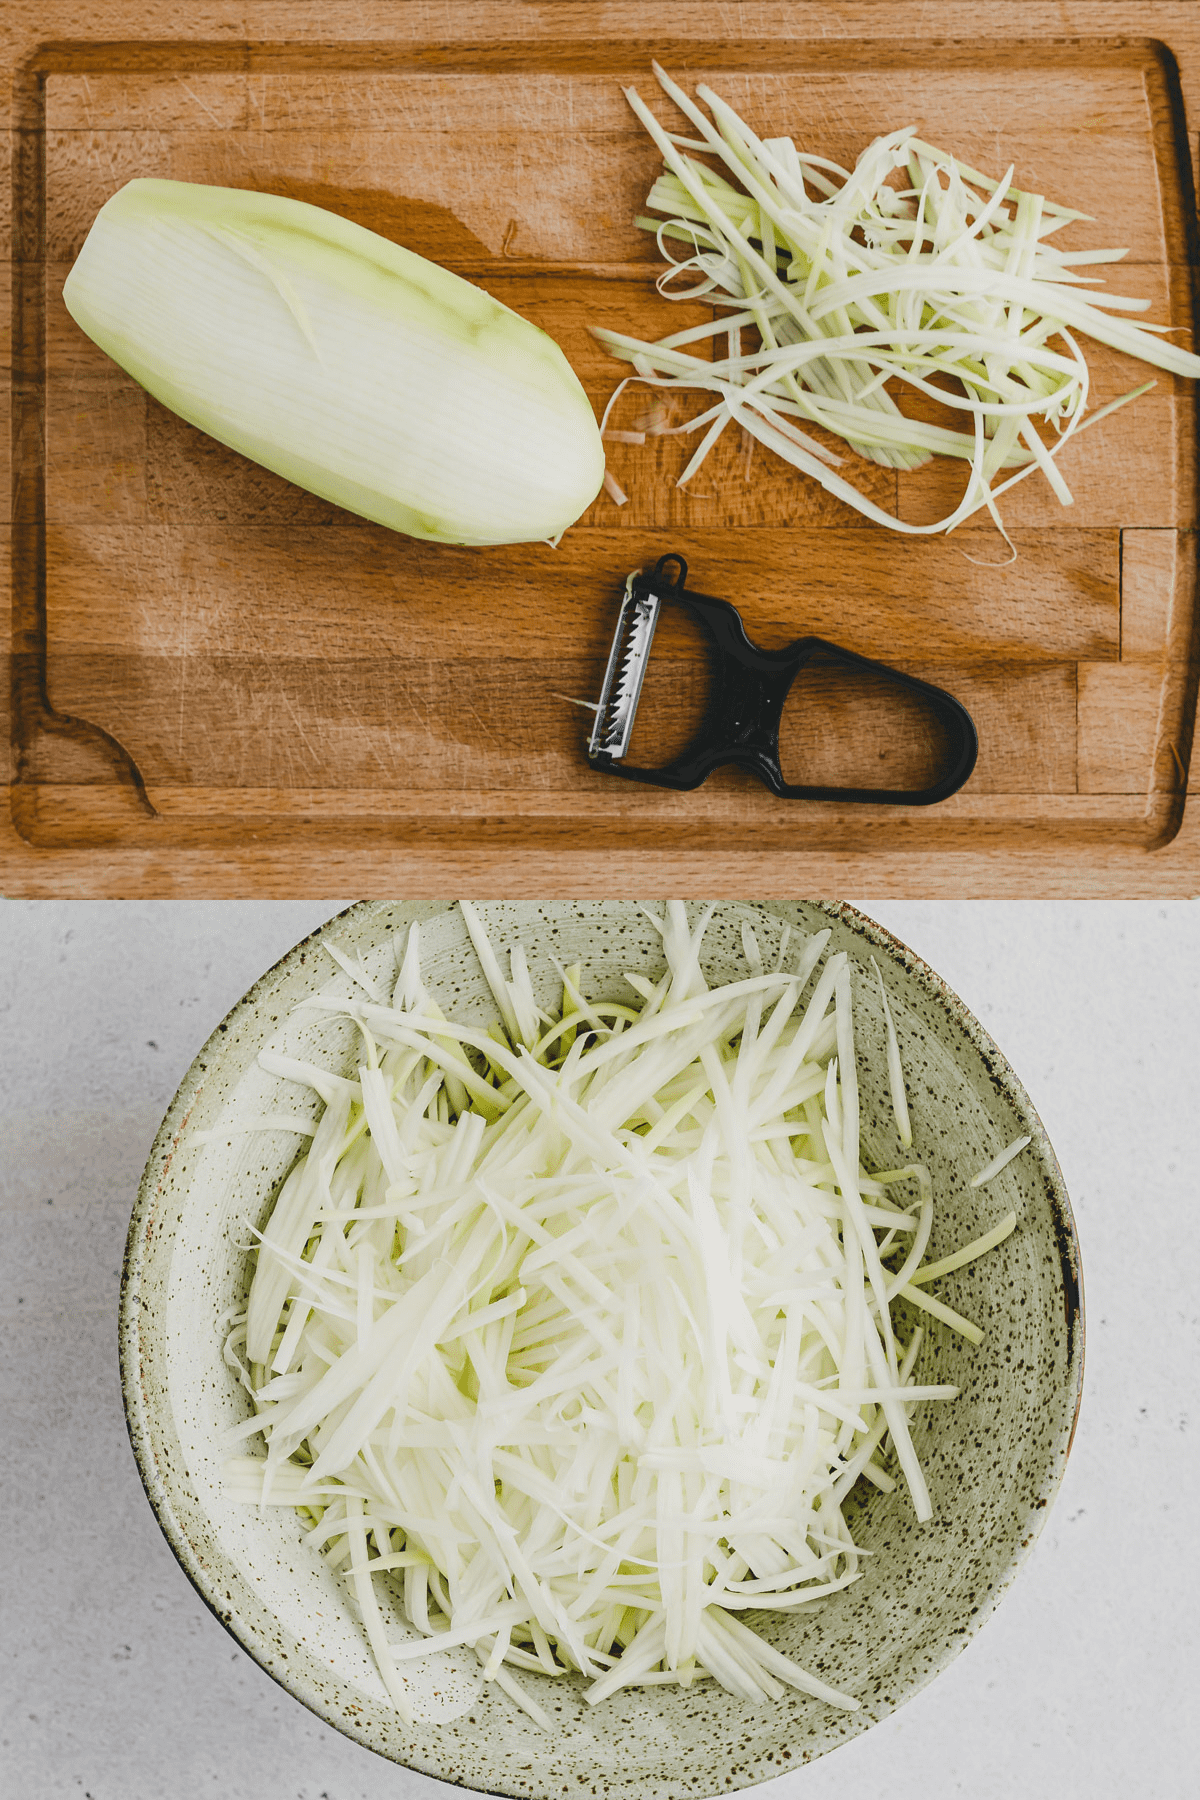 Papaya Salad Recipe Step 4-5